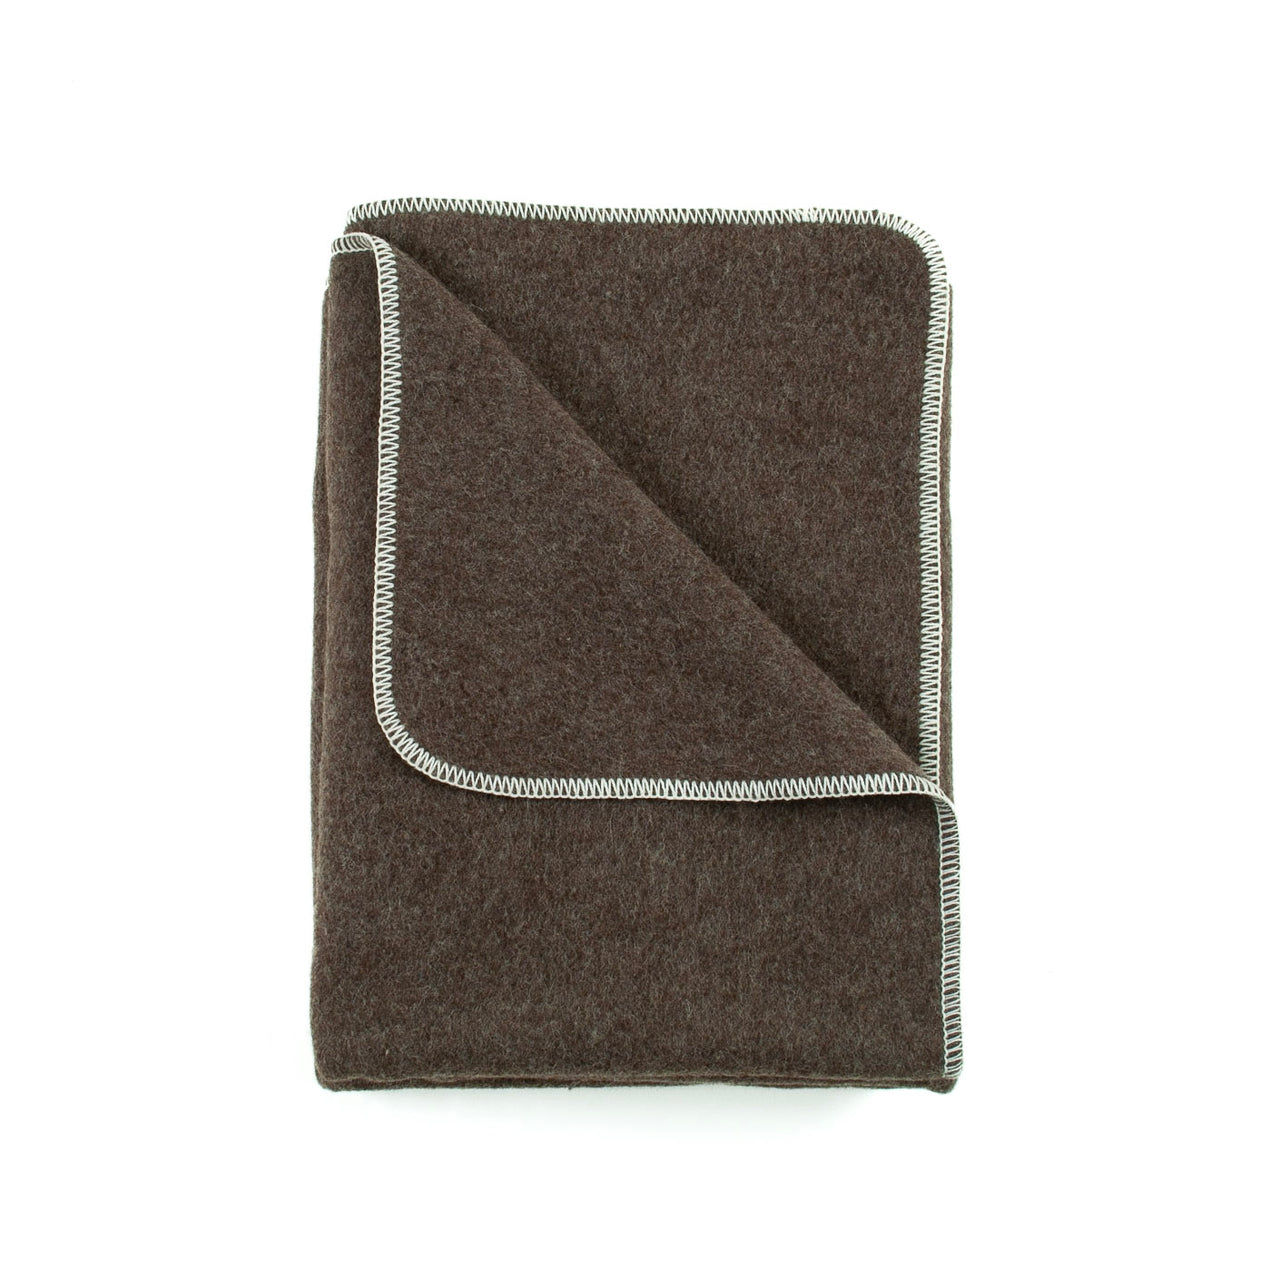 Brown Whipstitch Wool Blanket – Pure Soft Sheep Wool Blanket